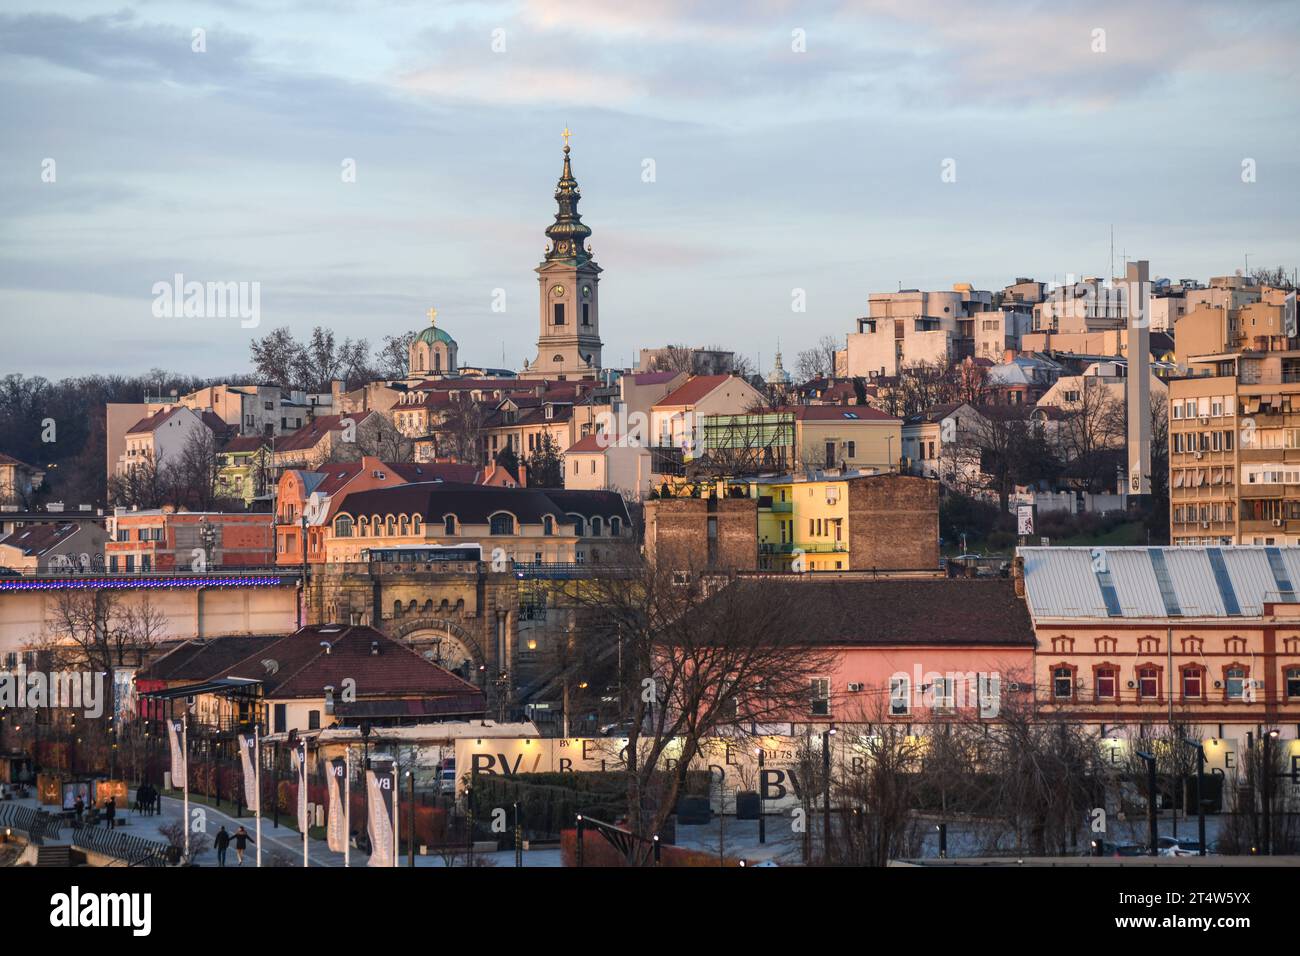 Belgrade: Old town skyline at sunset. Serbia Stock Photo